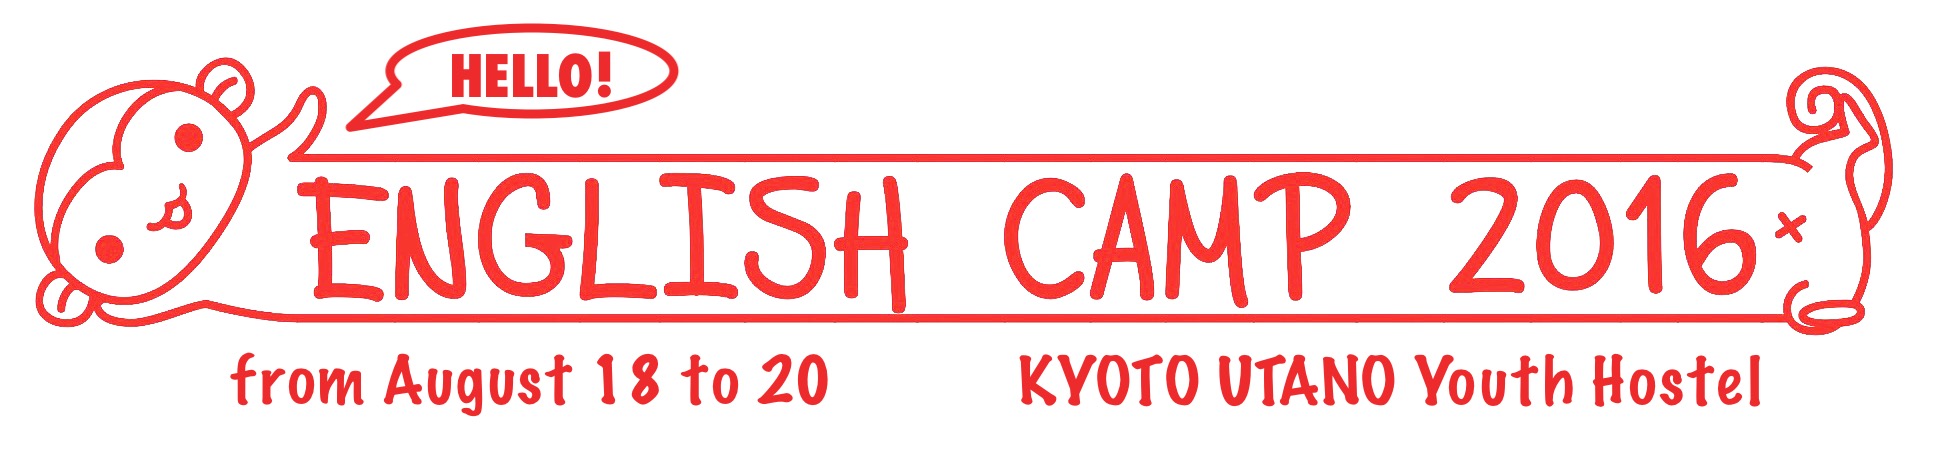 English Camp banner